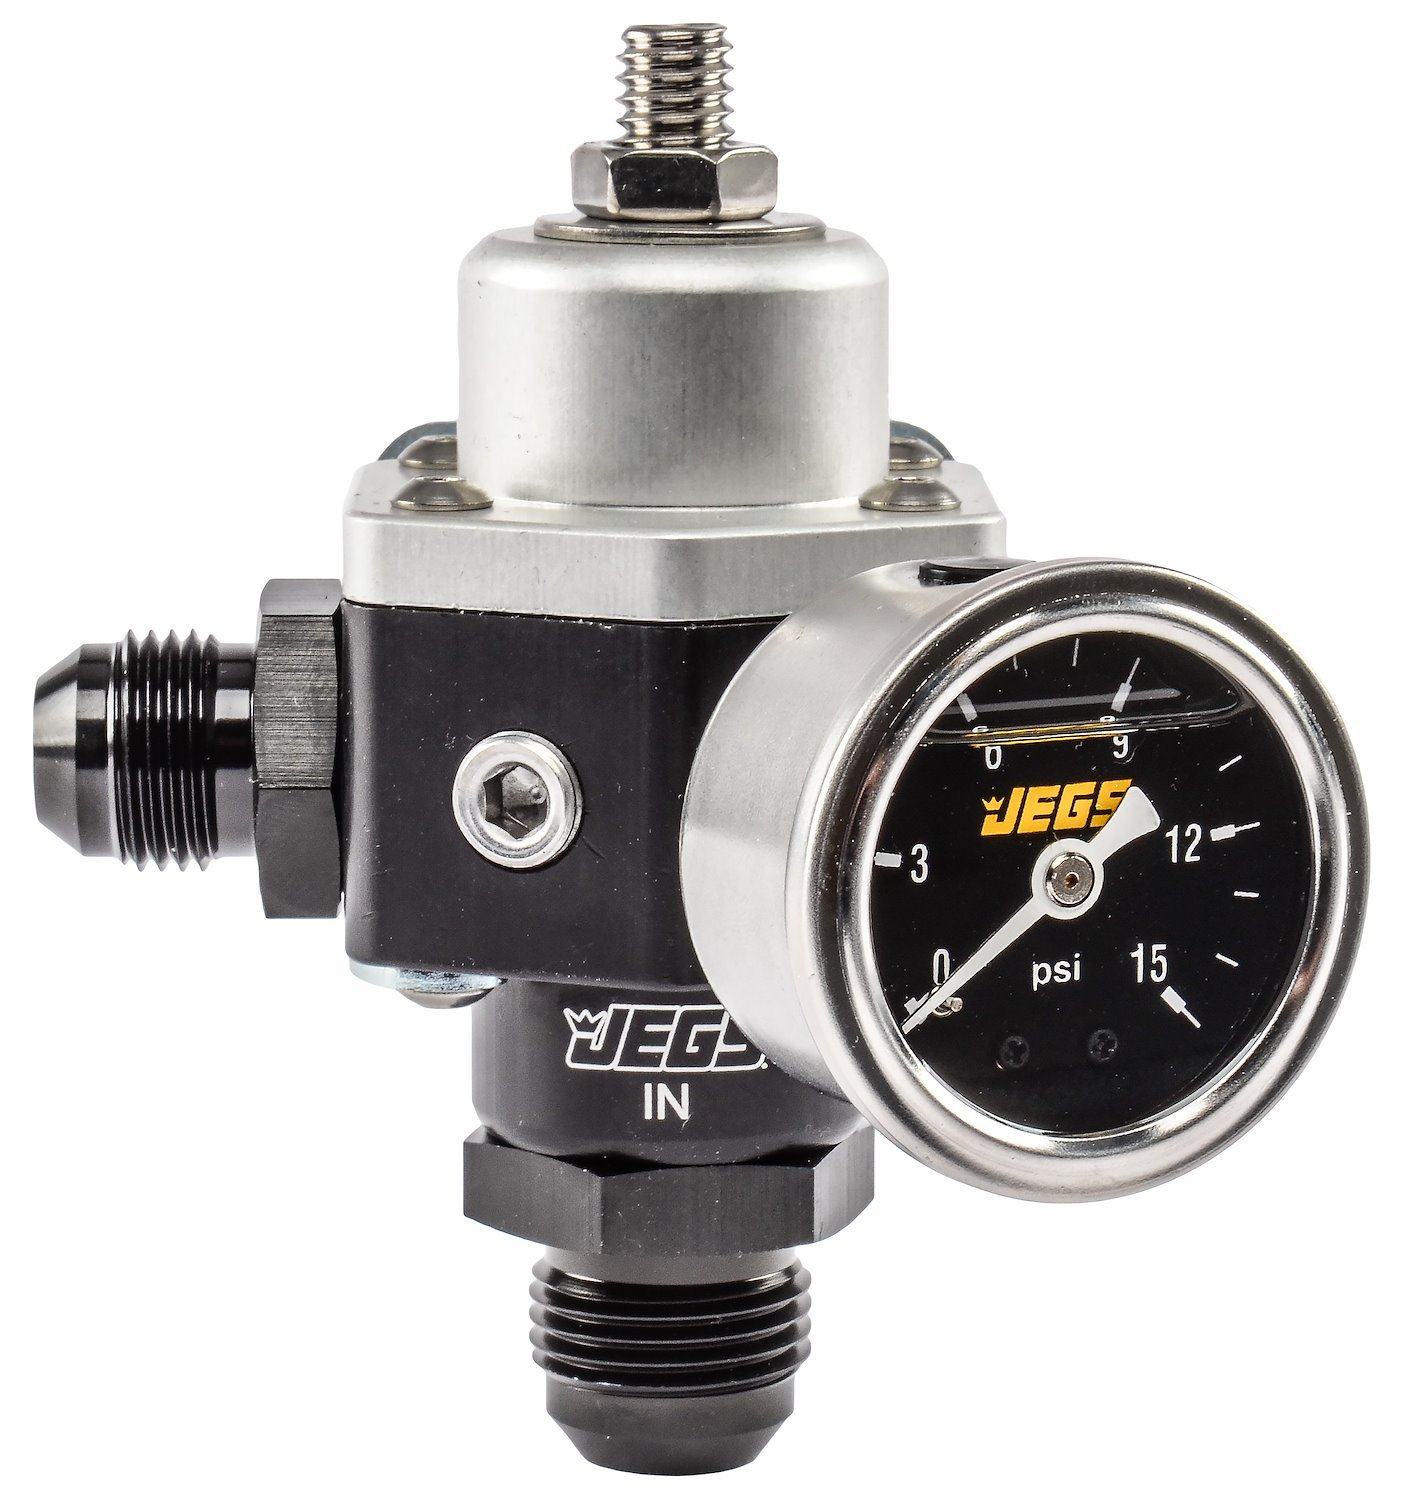 2-Port Fuel Pressure Regulator Kit with 5-12 PSI